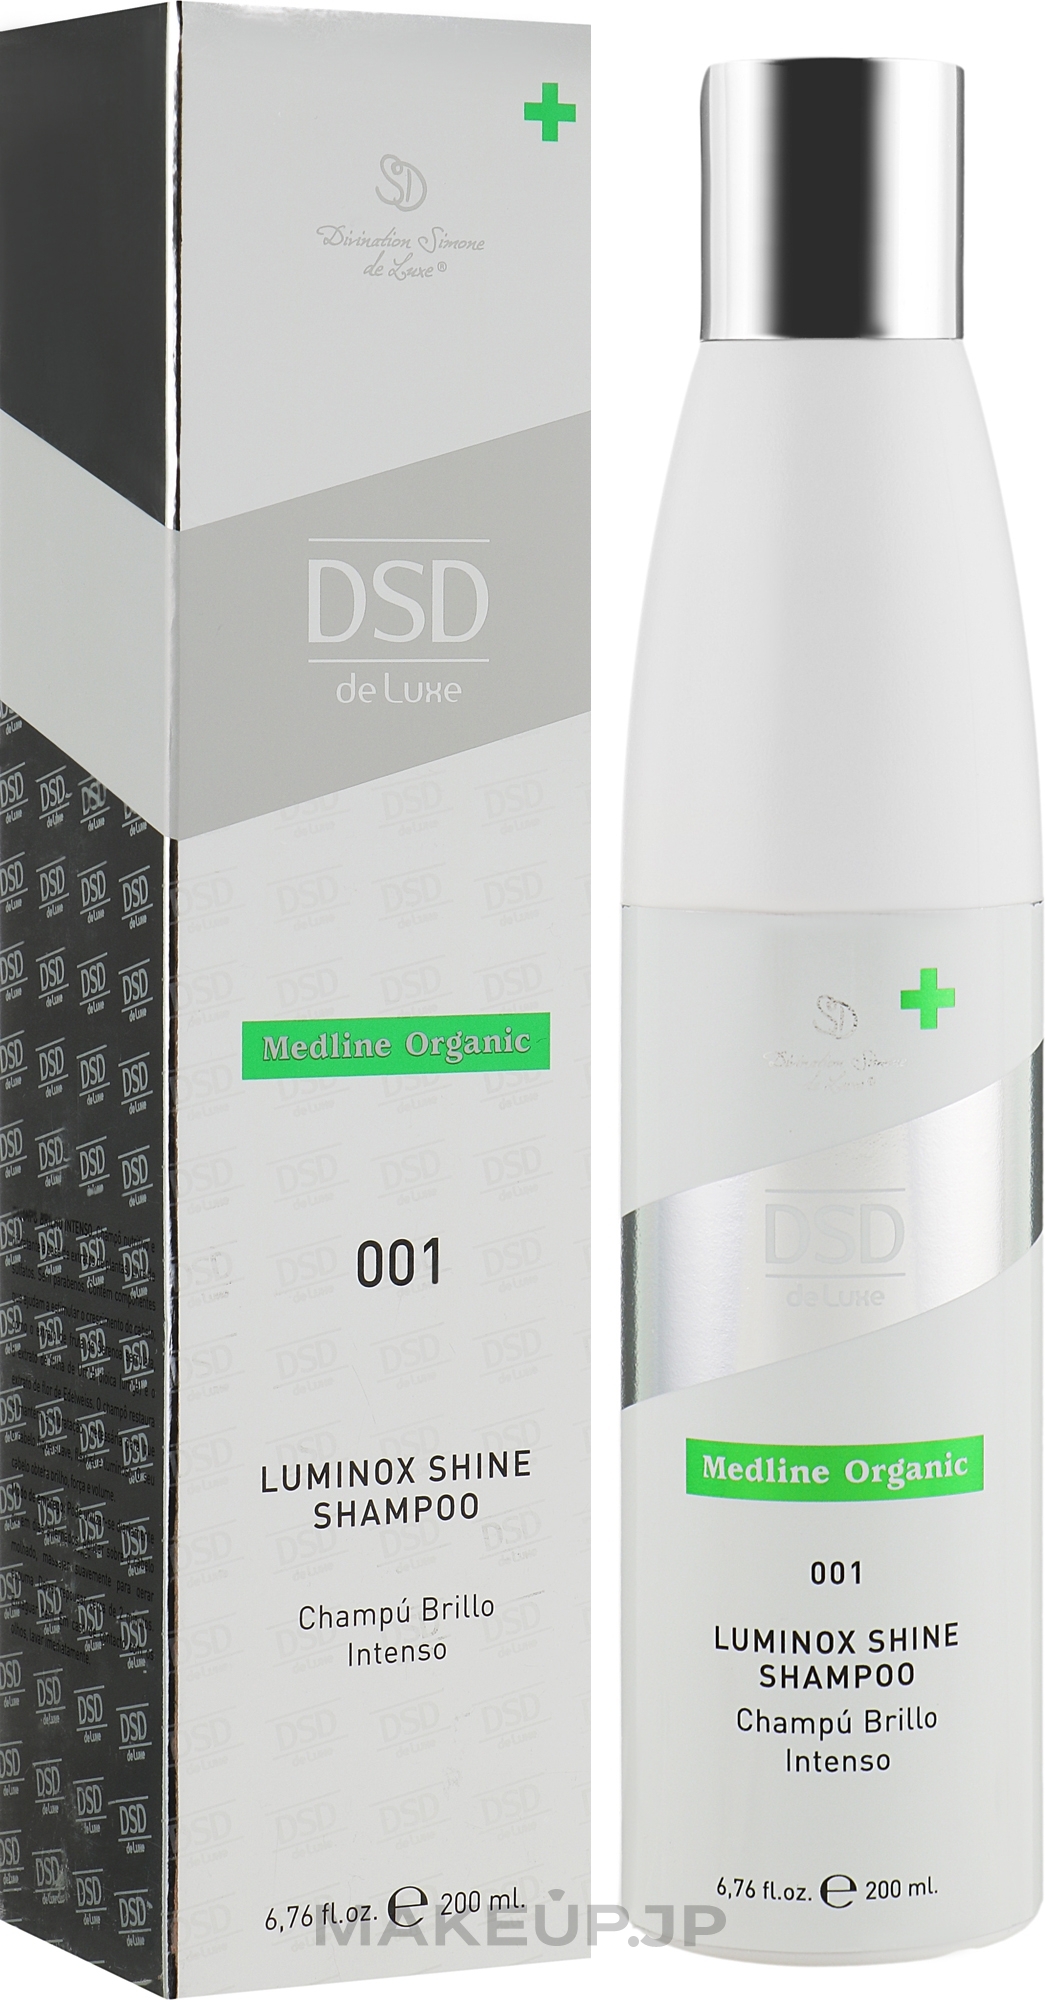 Luminox Shine Shampoo 001 - Simone DSD de Luxe Medline Organic Luminox Shine Shampoo — photo 200 ml